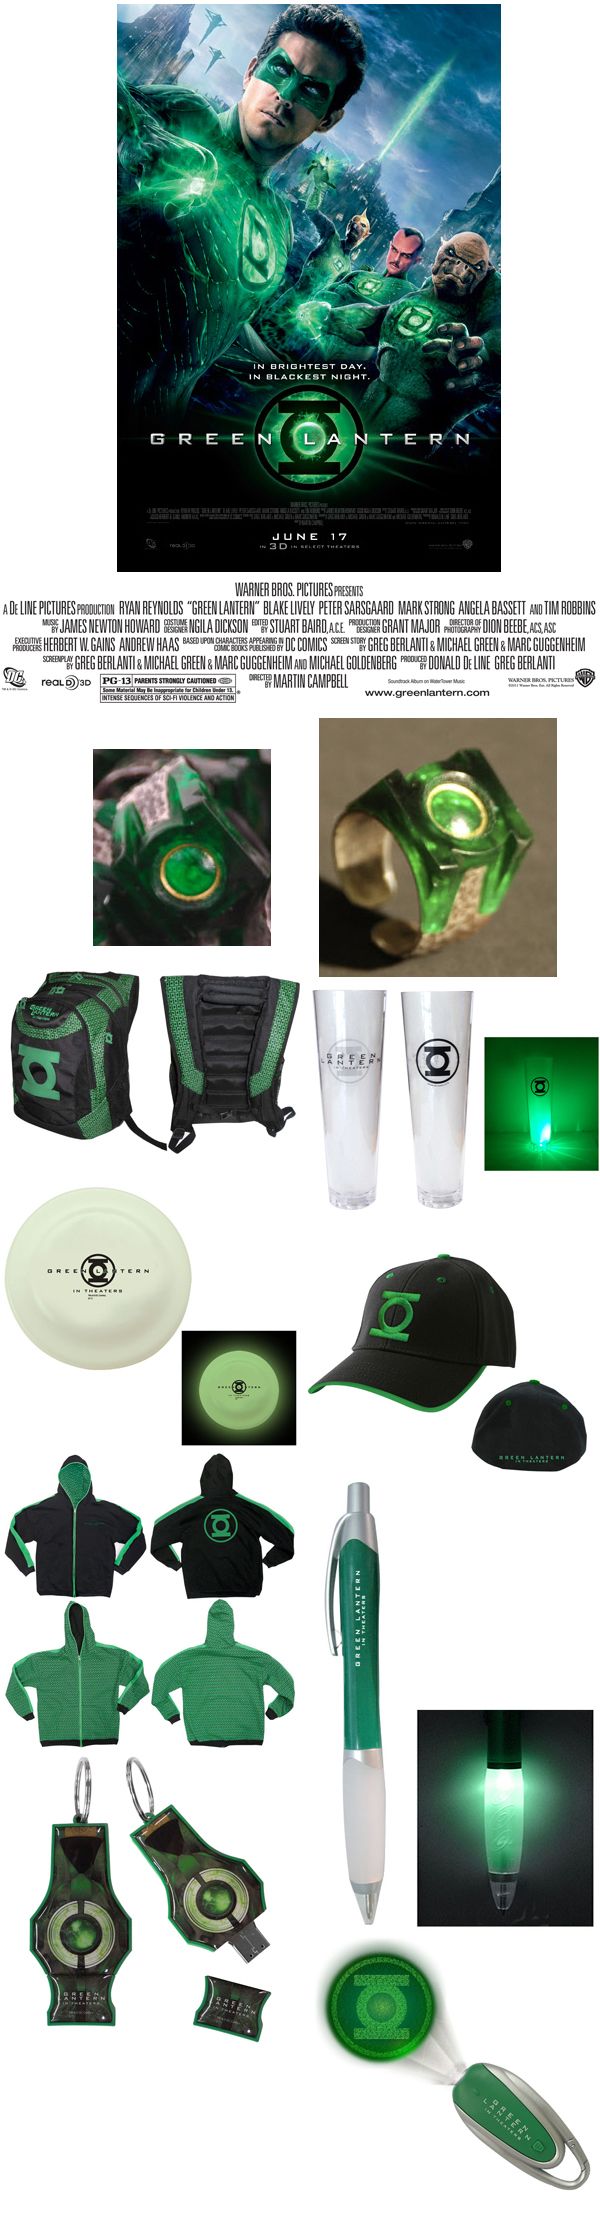 Green Lantern movie giveaway